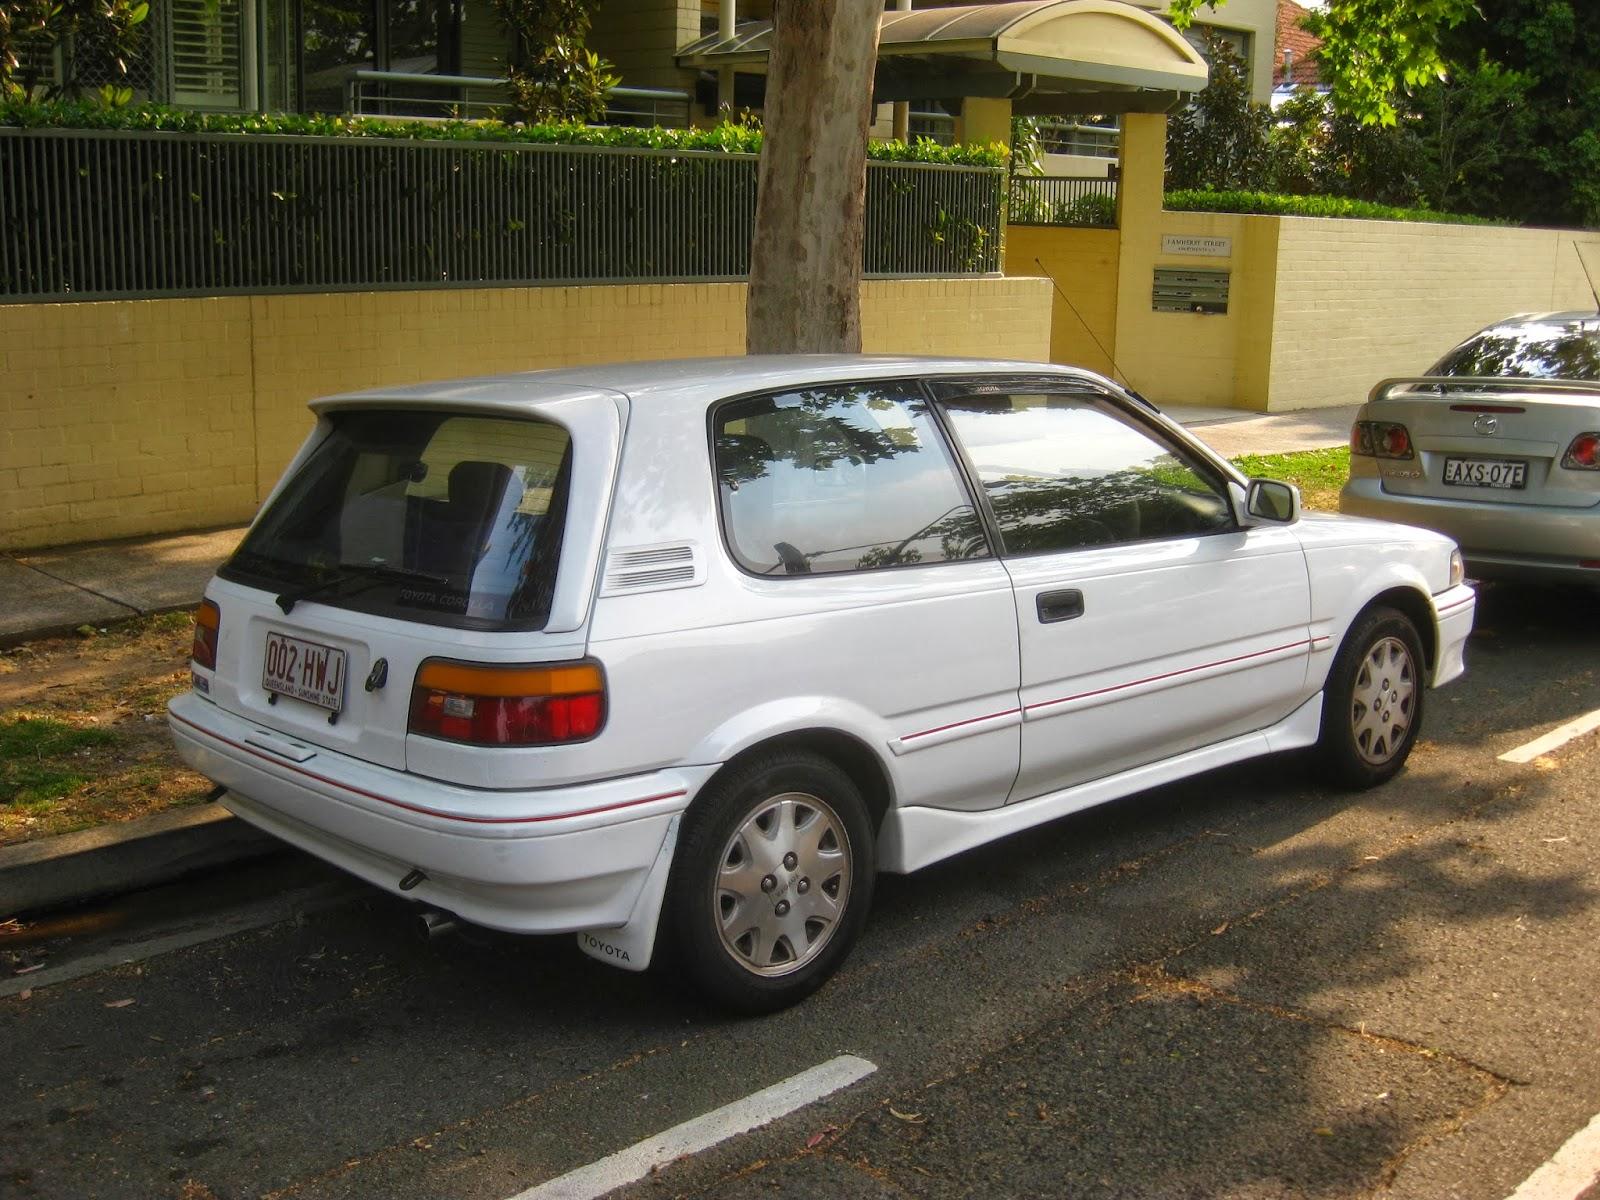 91 95 года. Тойота Королла FX 1989. Toyota Corolla FX gt. Toyota Corolla 100 FX. Toyota Corolla ae92 gt.